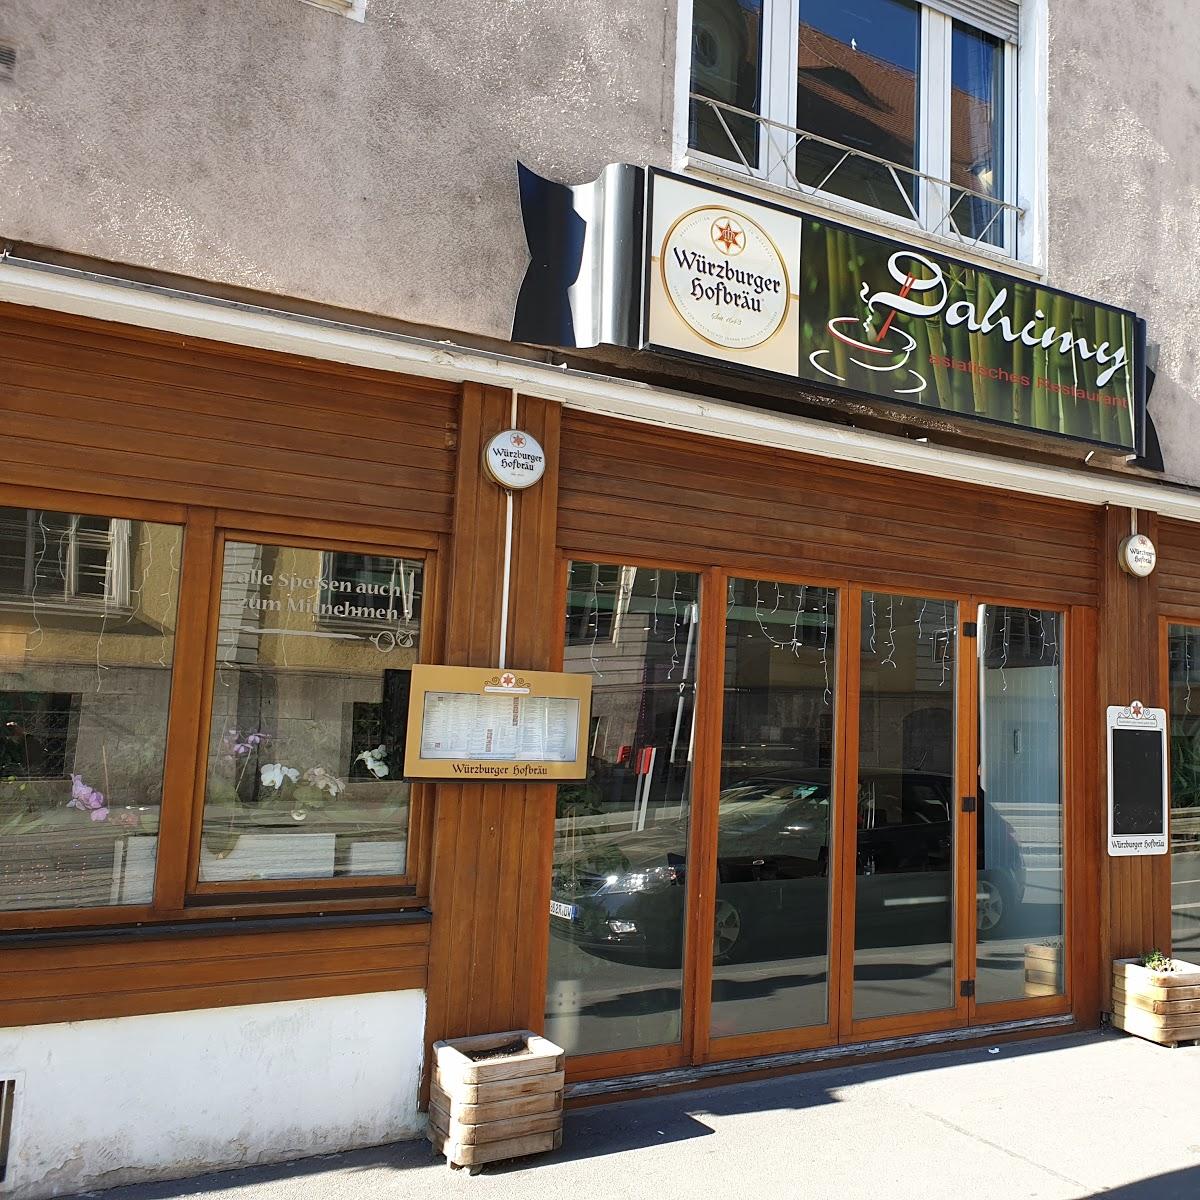 Restaurant "Dahimy" in Würzburg